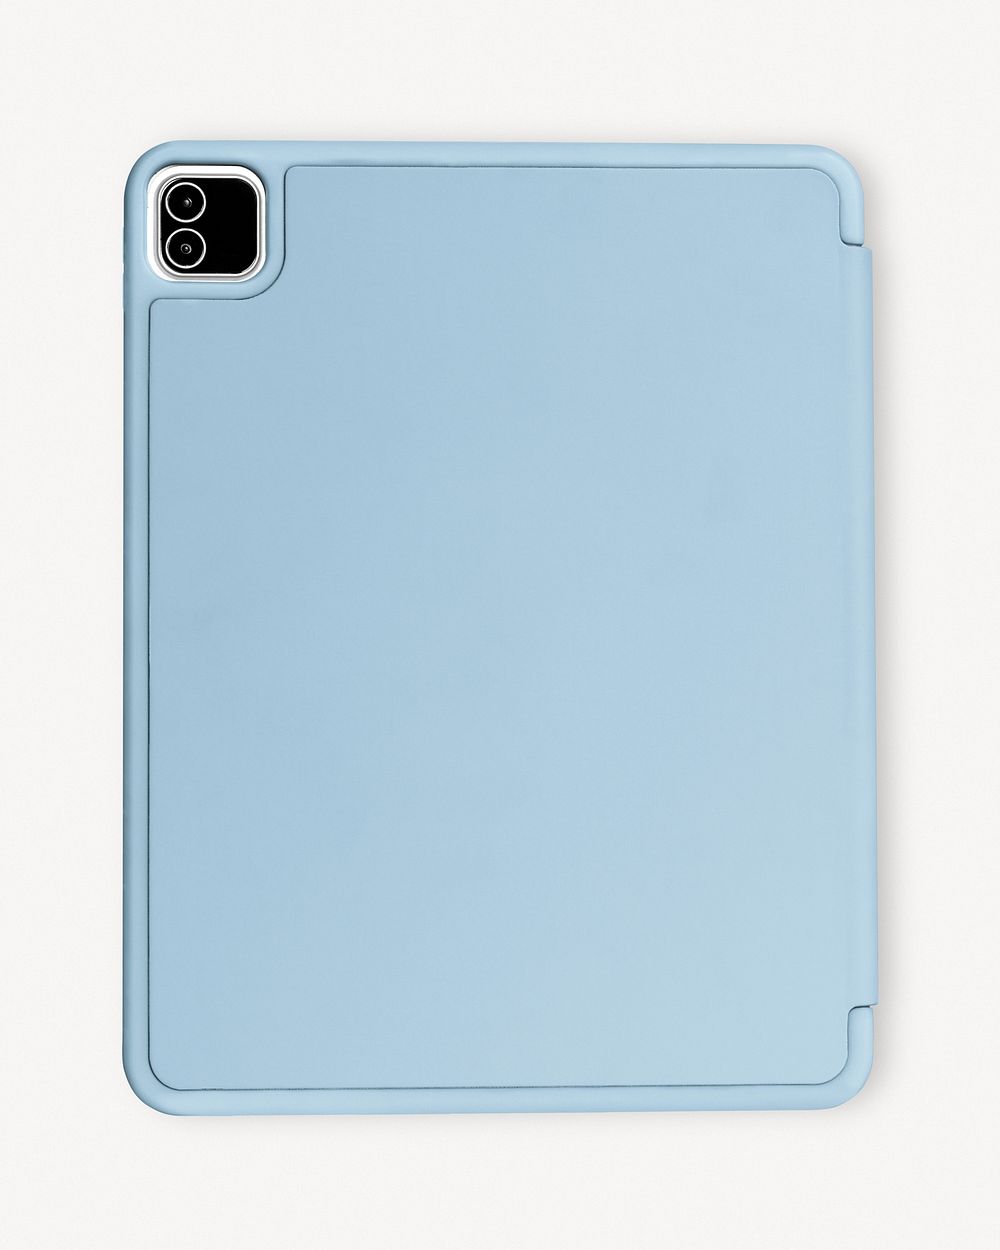 Blue tablet case rear-view mockup psd